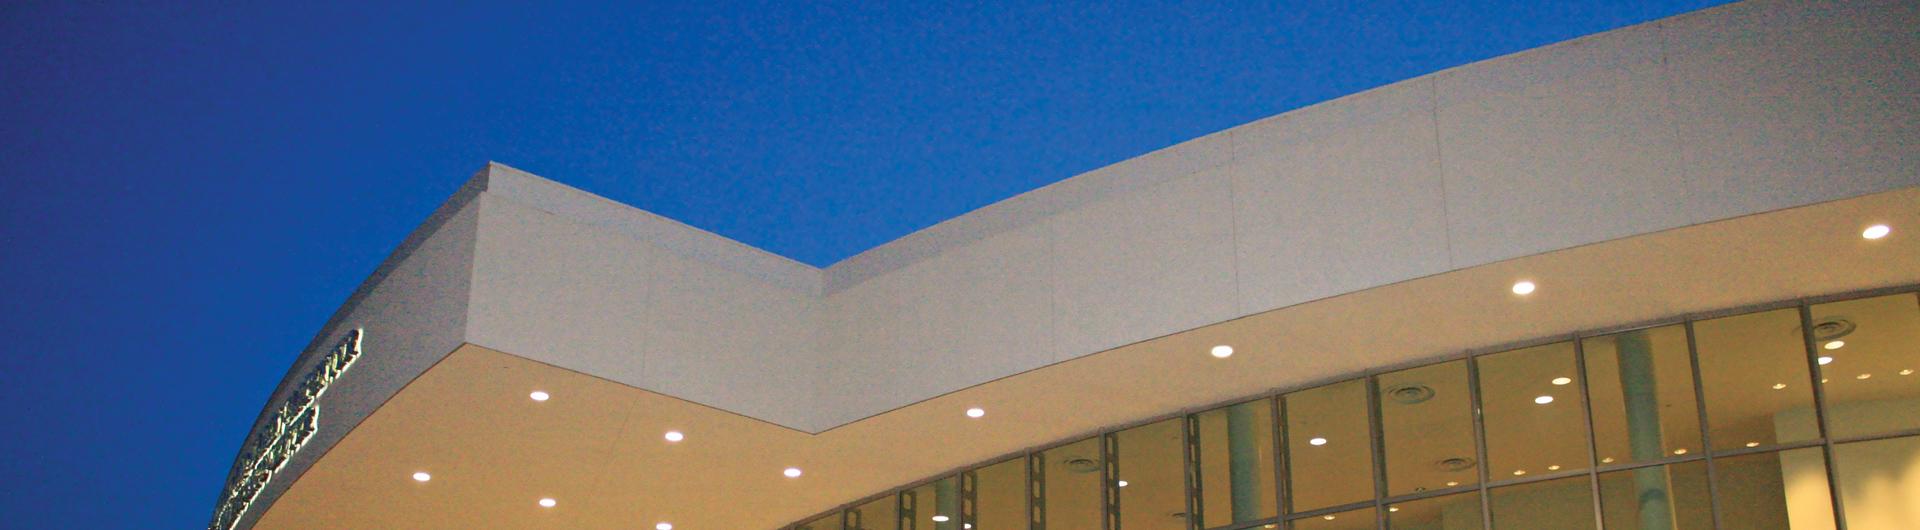 Exterior photograph of the Carpenter Center at night.